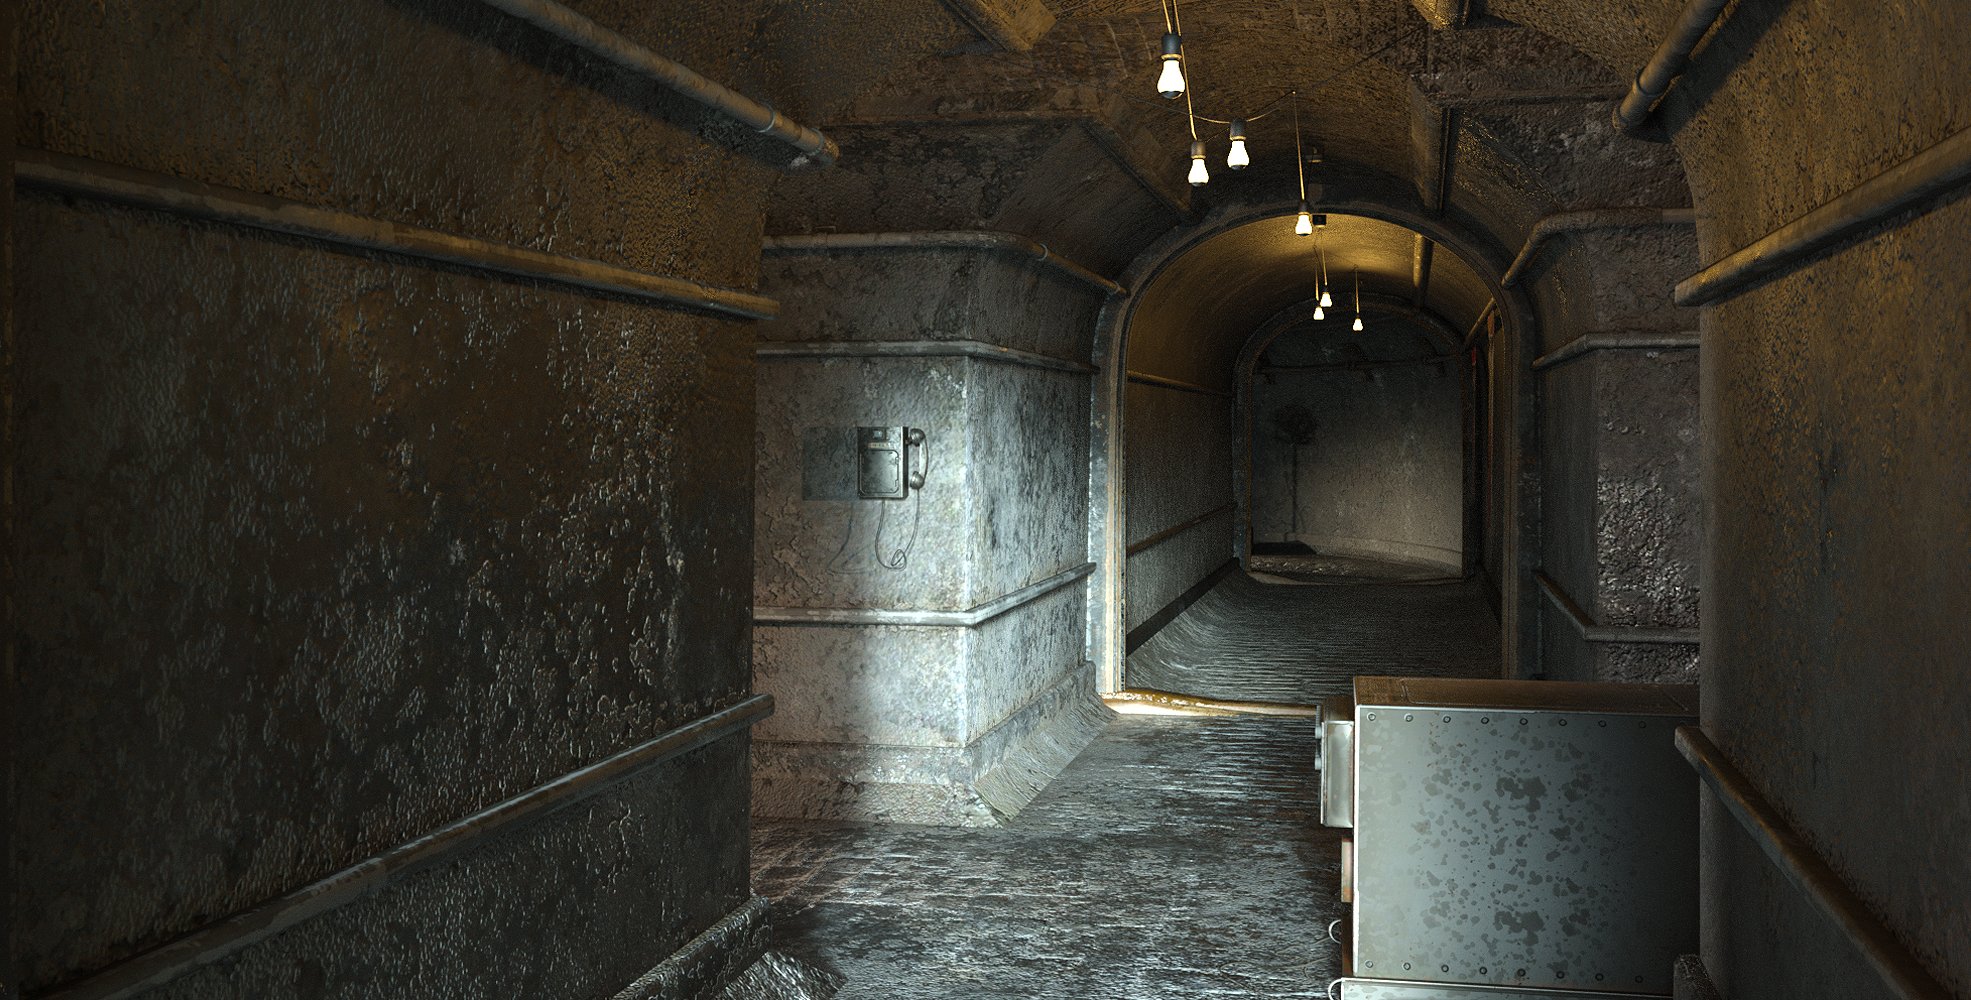 Underground War Room by: The AntFarm, 3D Models by Daz 3D